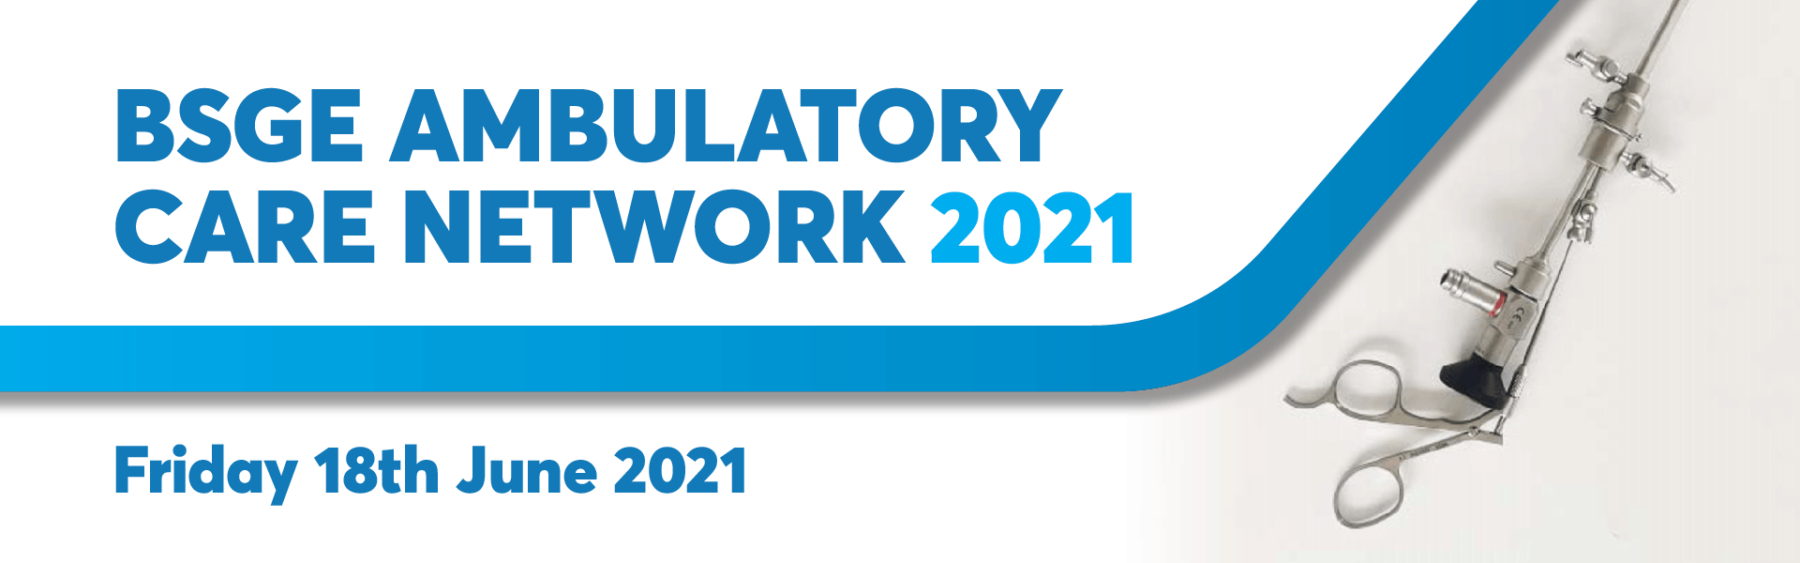 Ambulatory Care Network Meeting 2021